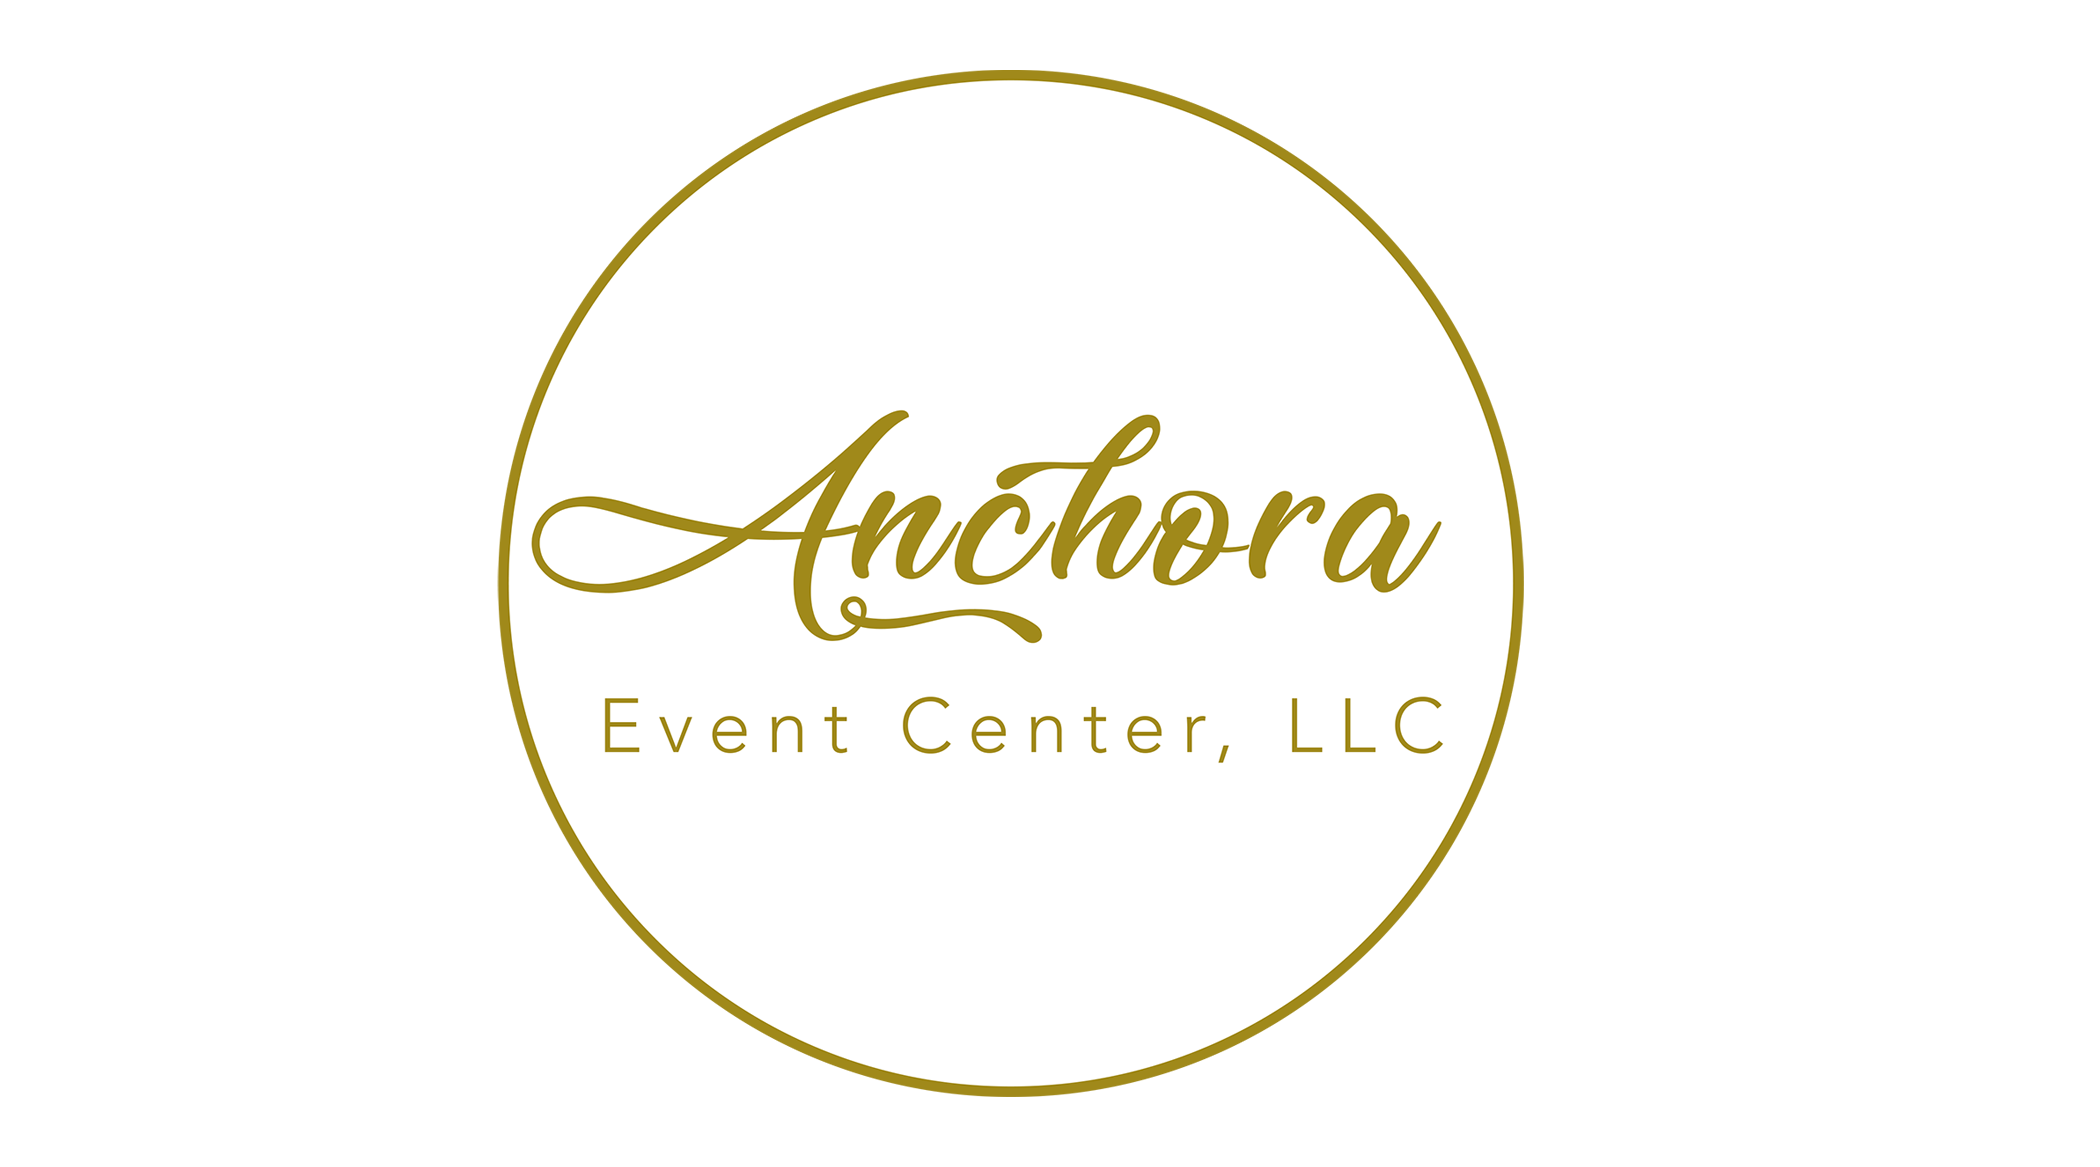 Anchora Event Center, LLC